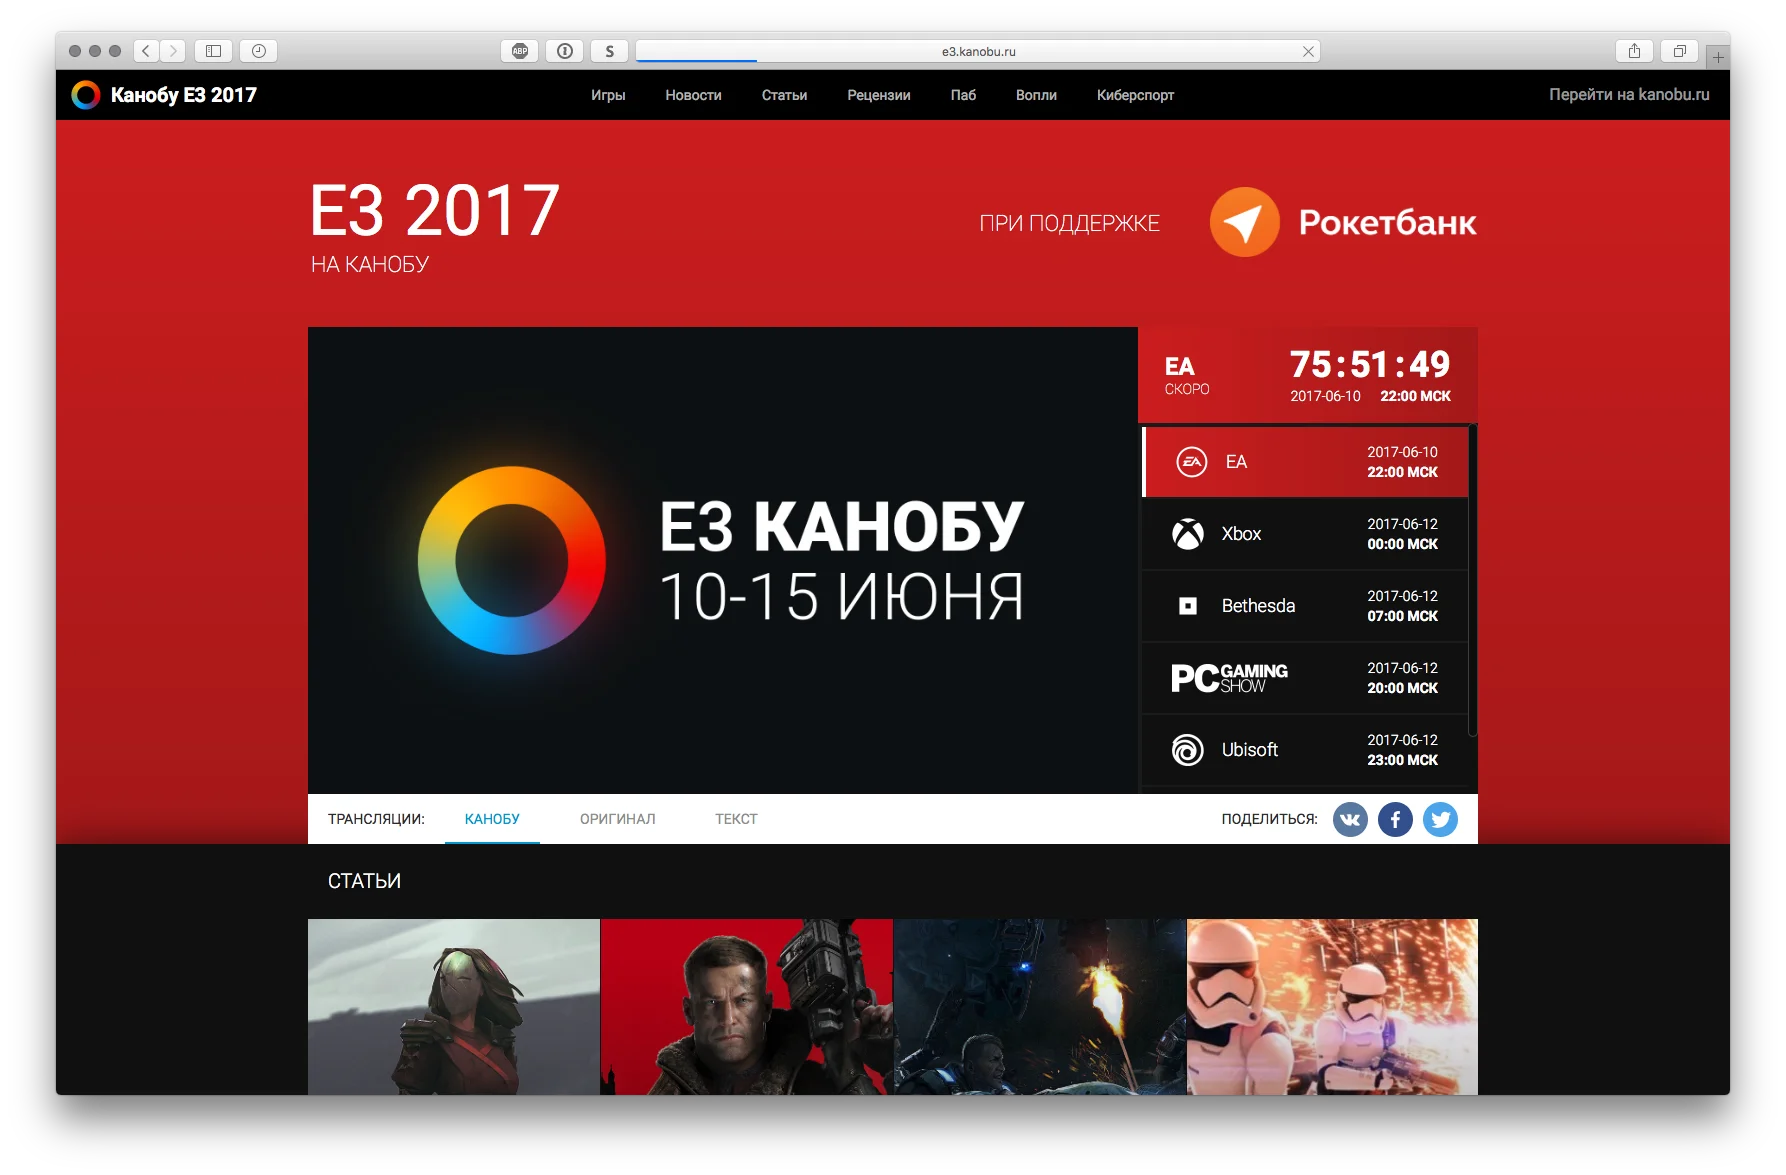 E3 2017 с «Канобу» и «Рокетбанком»: три PS4 Pro, бинго, усы Пивоварова - фото 1